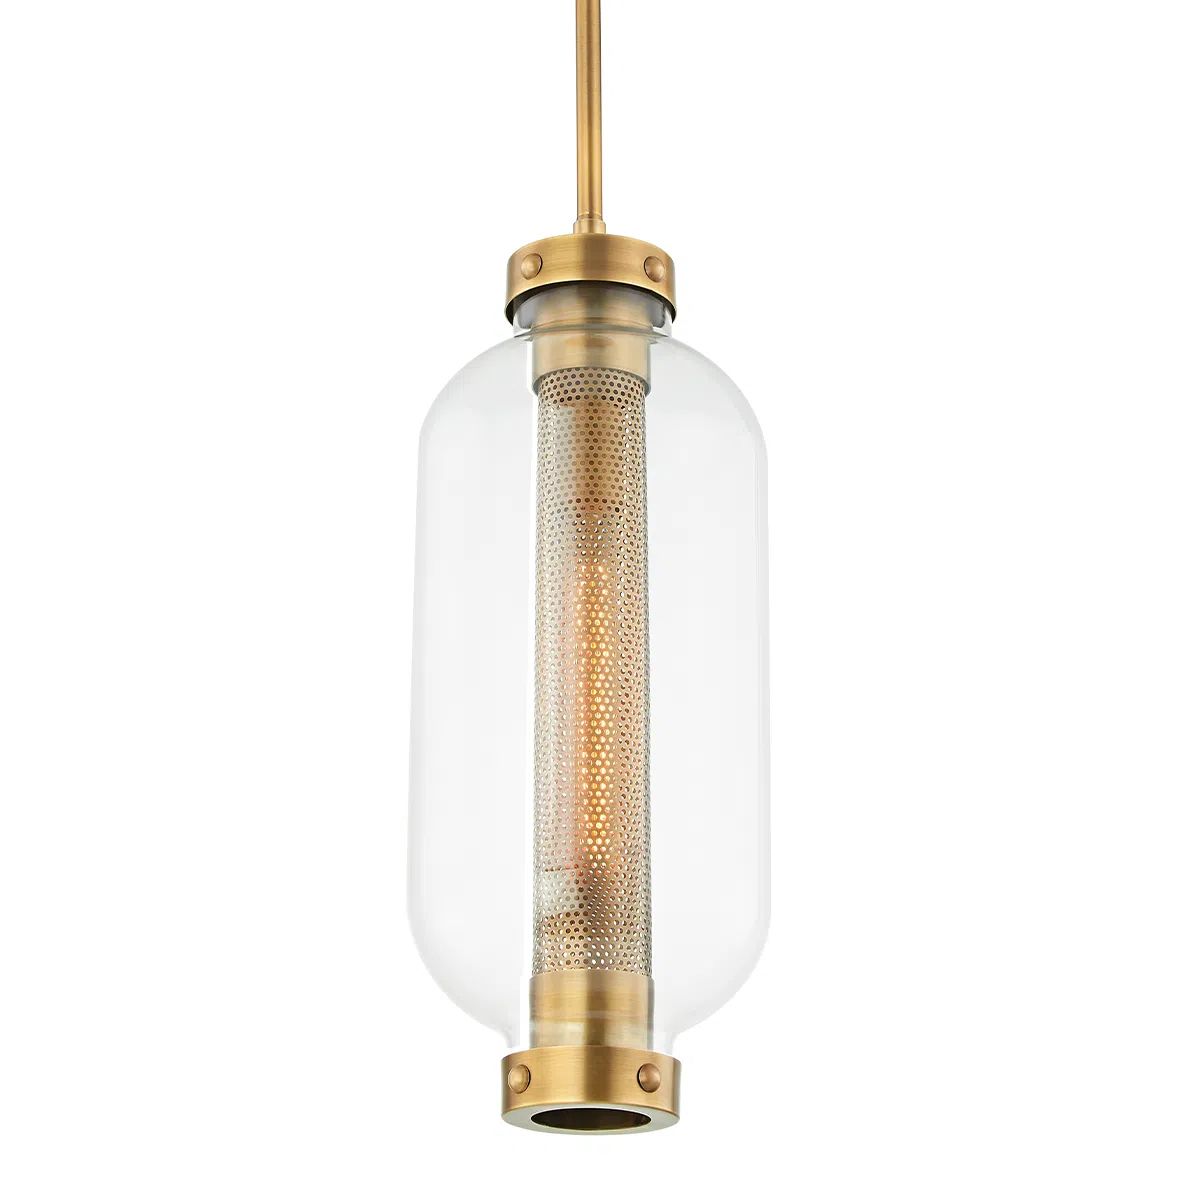 Buitenlamp plafondlamp hanglamp Atwater hudson valley lighting tuinextra exclusieve buitenverlichting